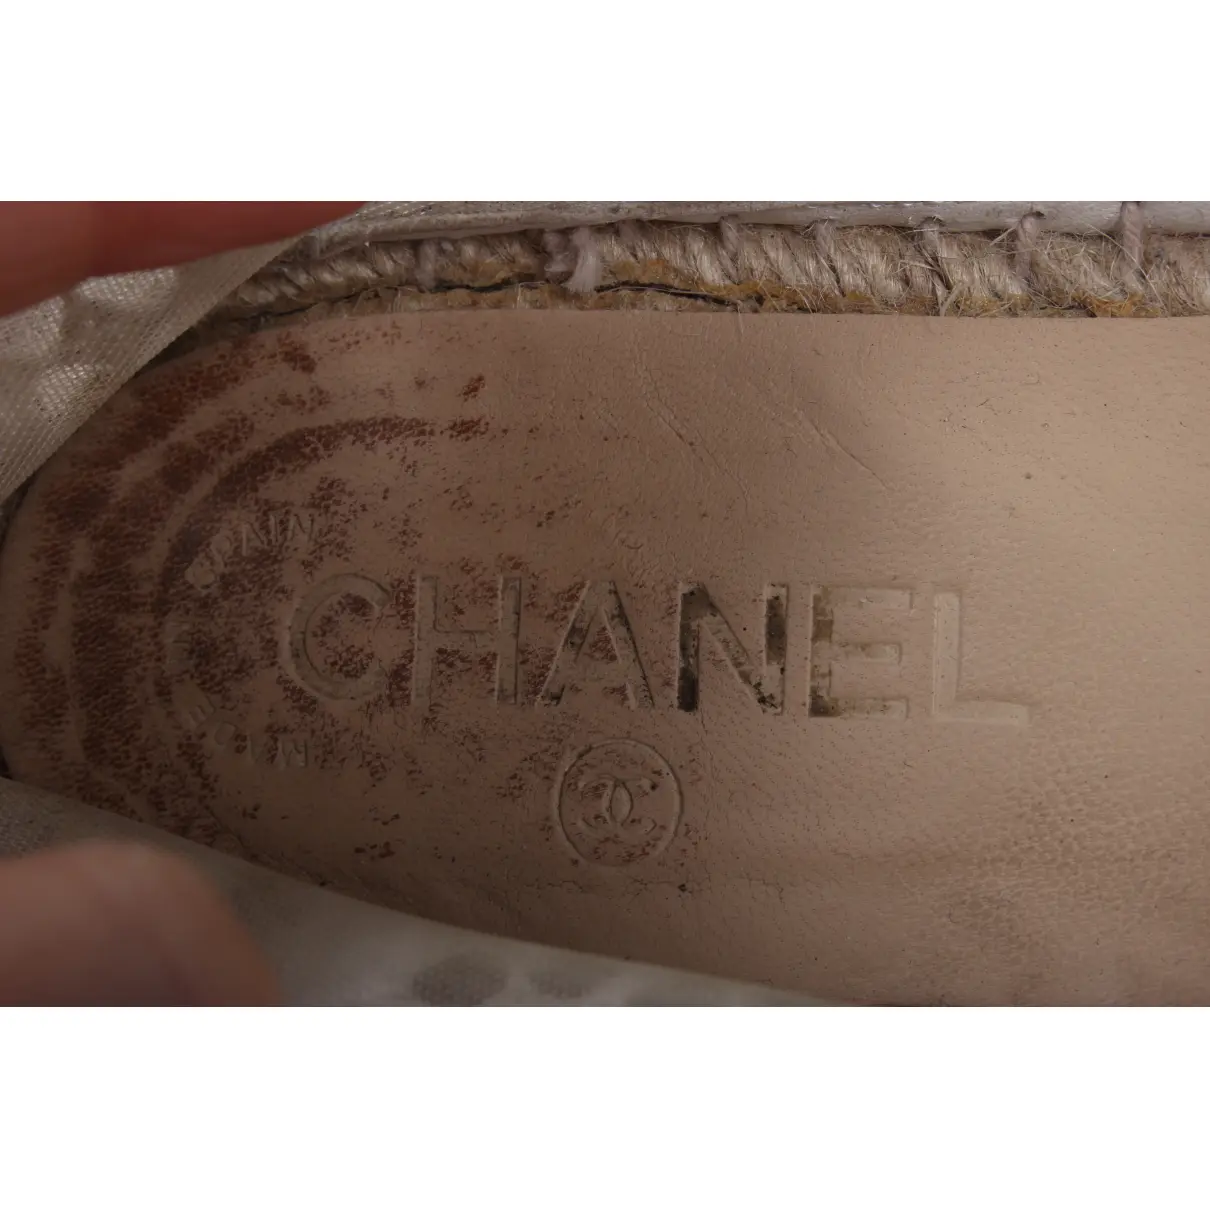 Buy Chanel Cloth espadrilles online